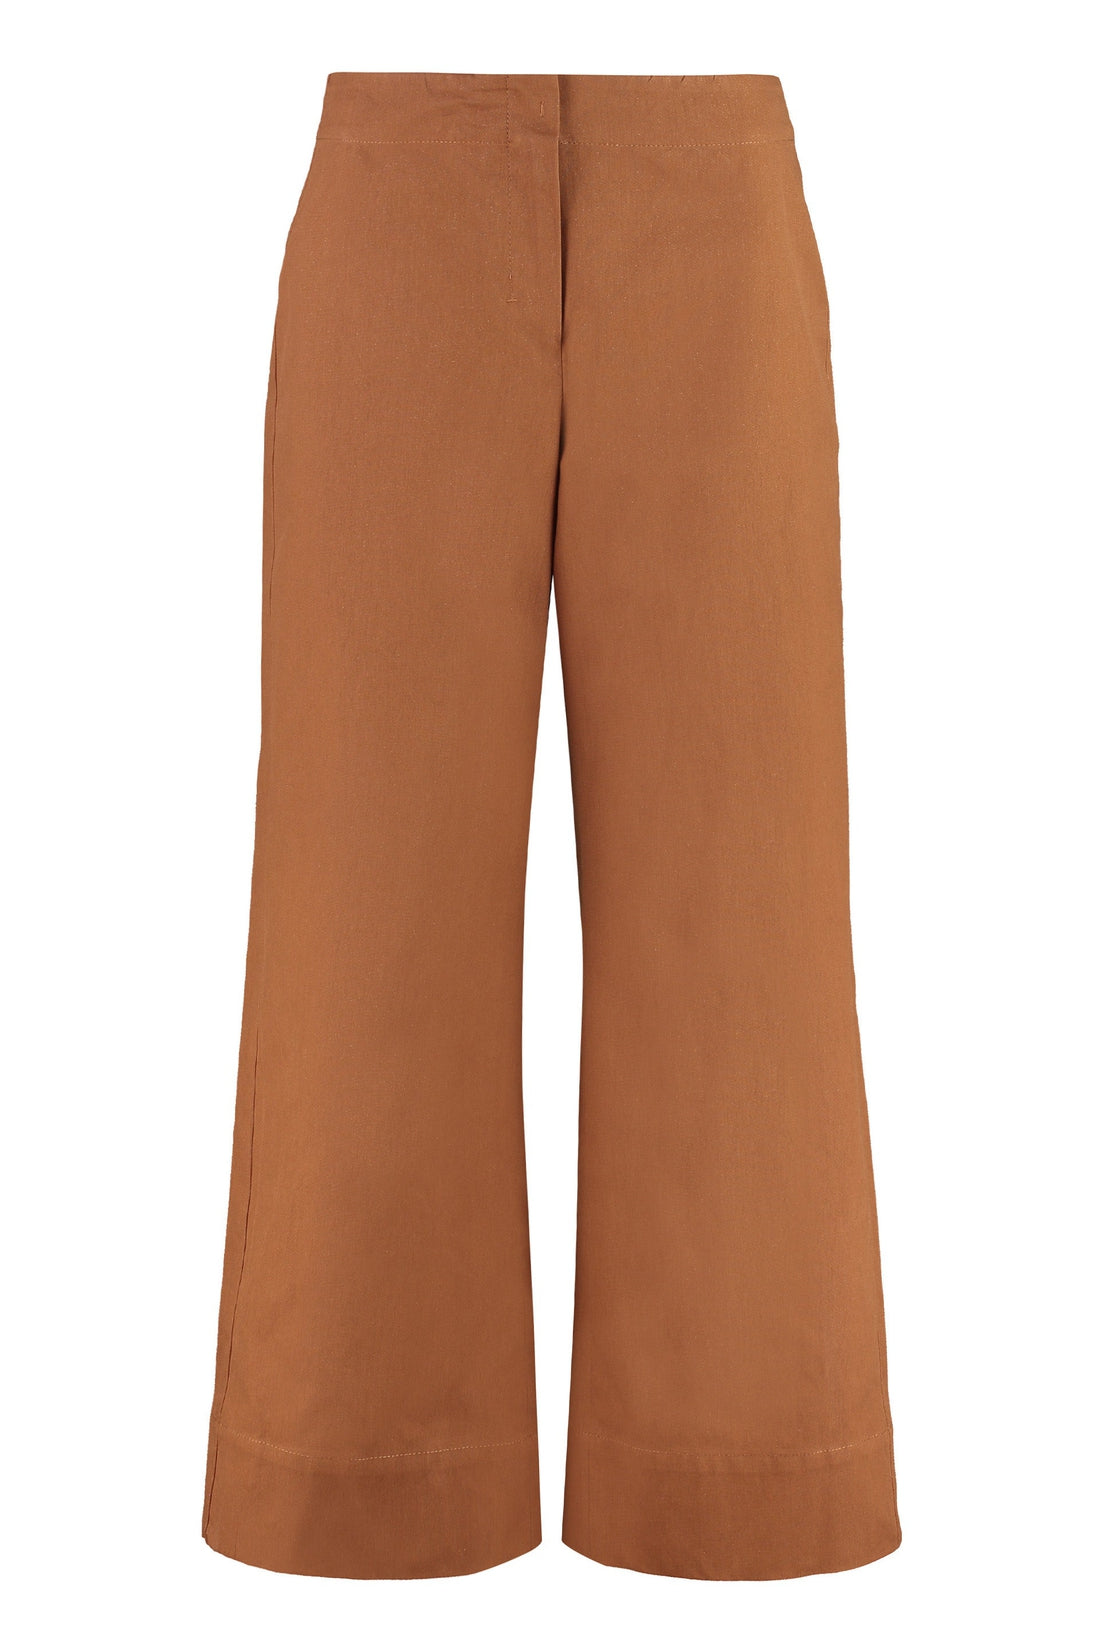 Max Mara-OUTLET-SALE-Lonza high-rise cotton trousers-ARCHIVIST